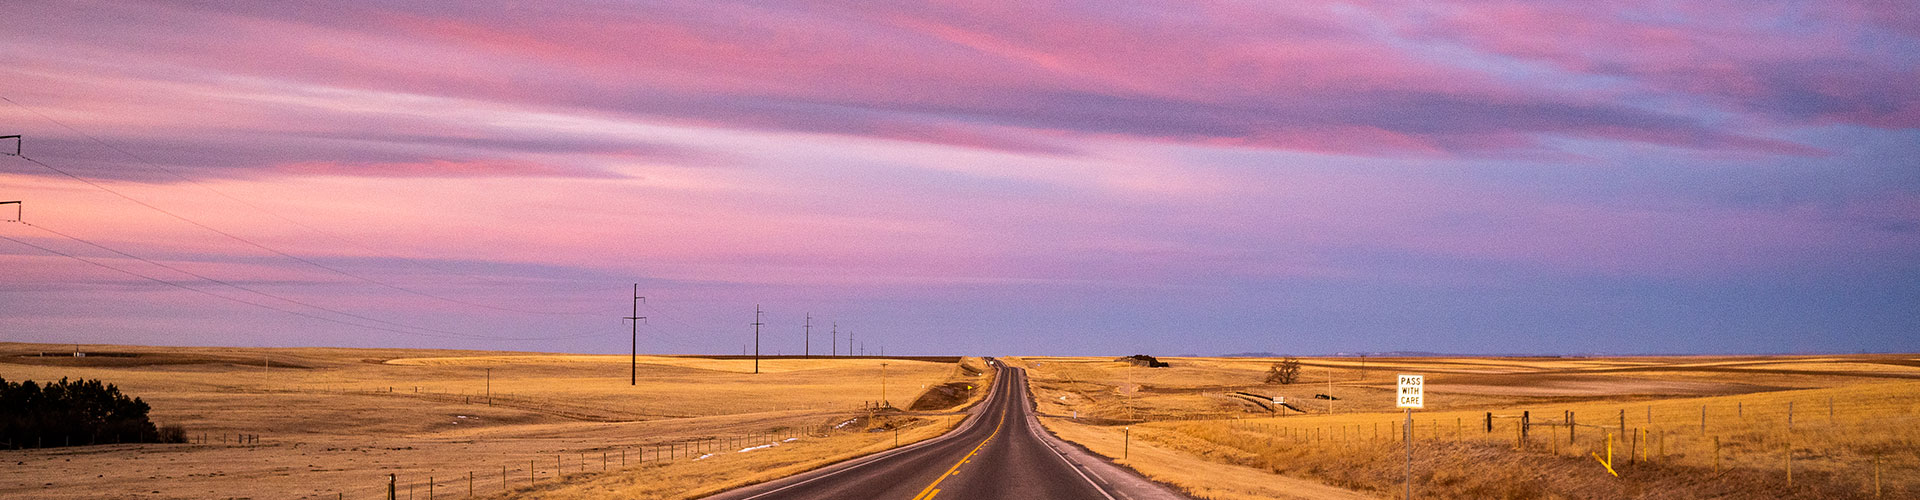 Rural highway at sunset